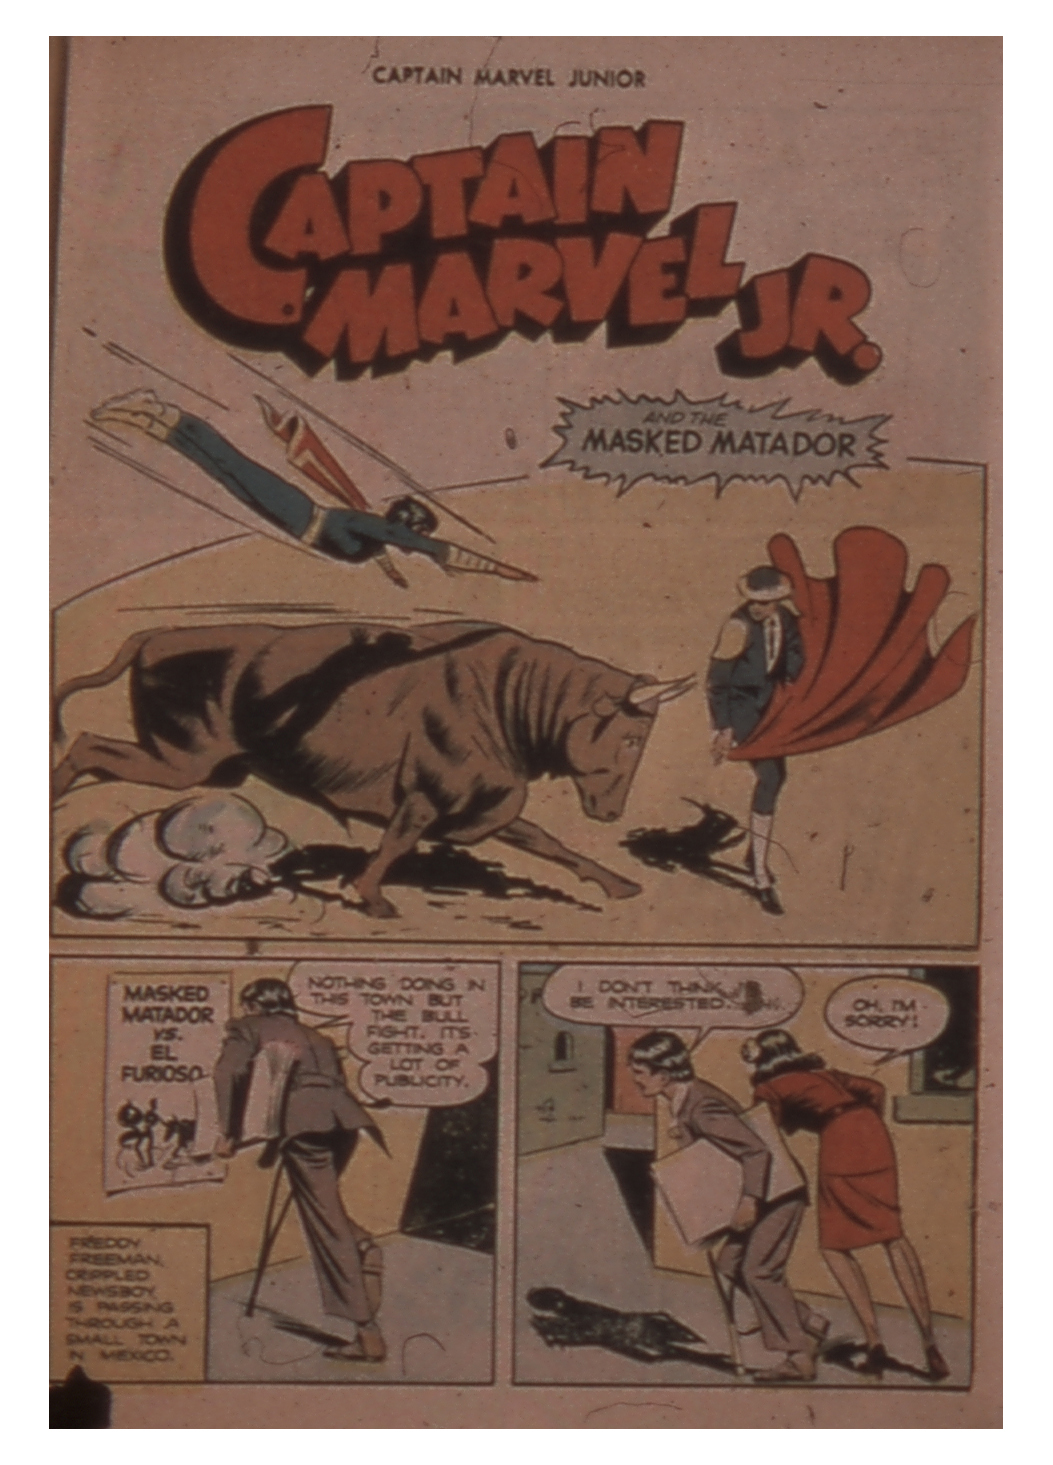 Read online Captain Marvel, Jr. comic -  Issue #24 - 13